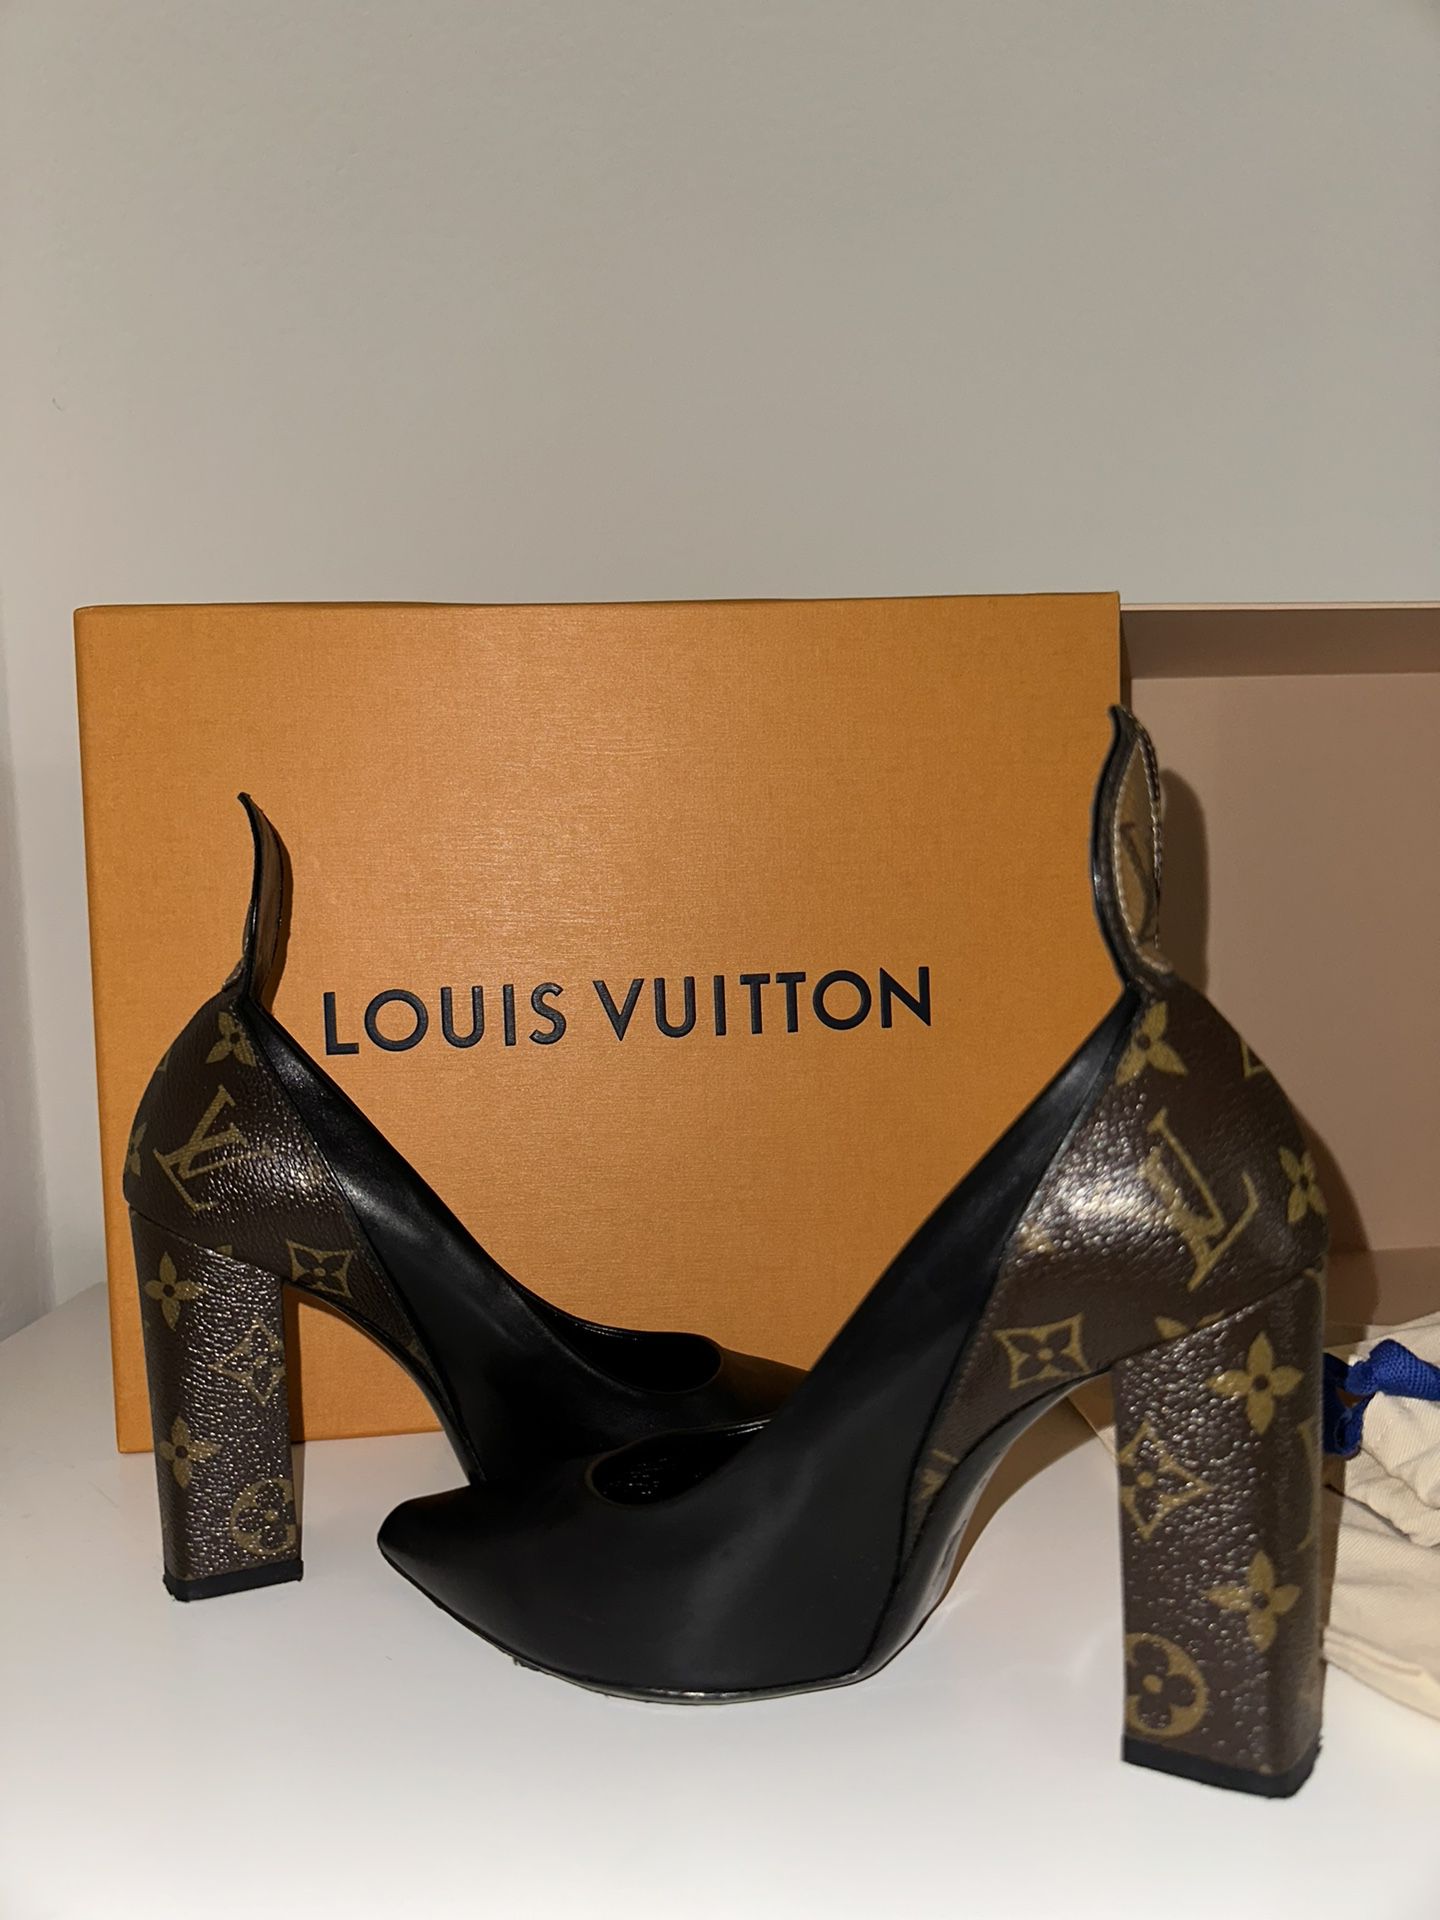 Louis Vuitton Bellevue - 2 For Sale on 1stDibs